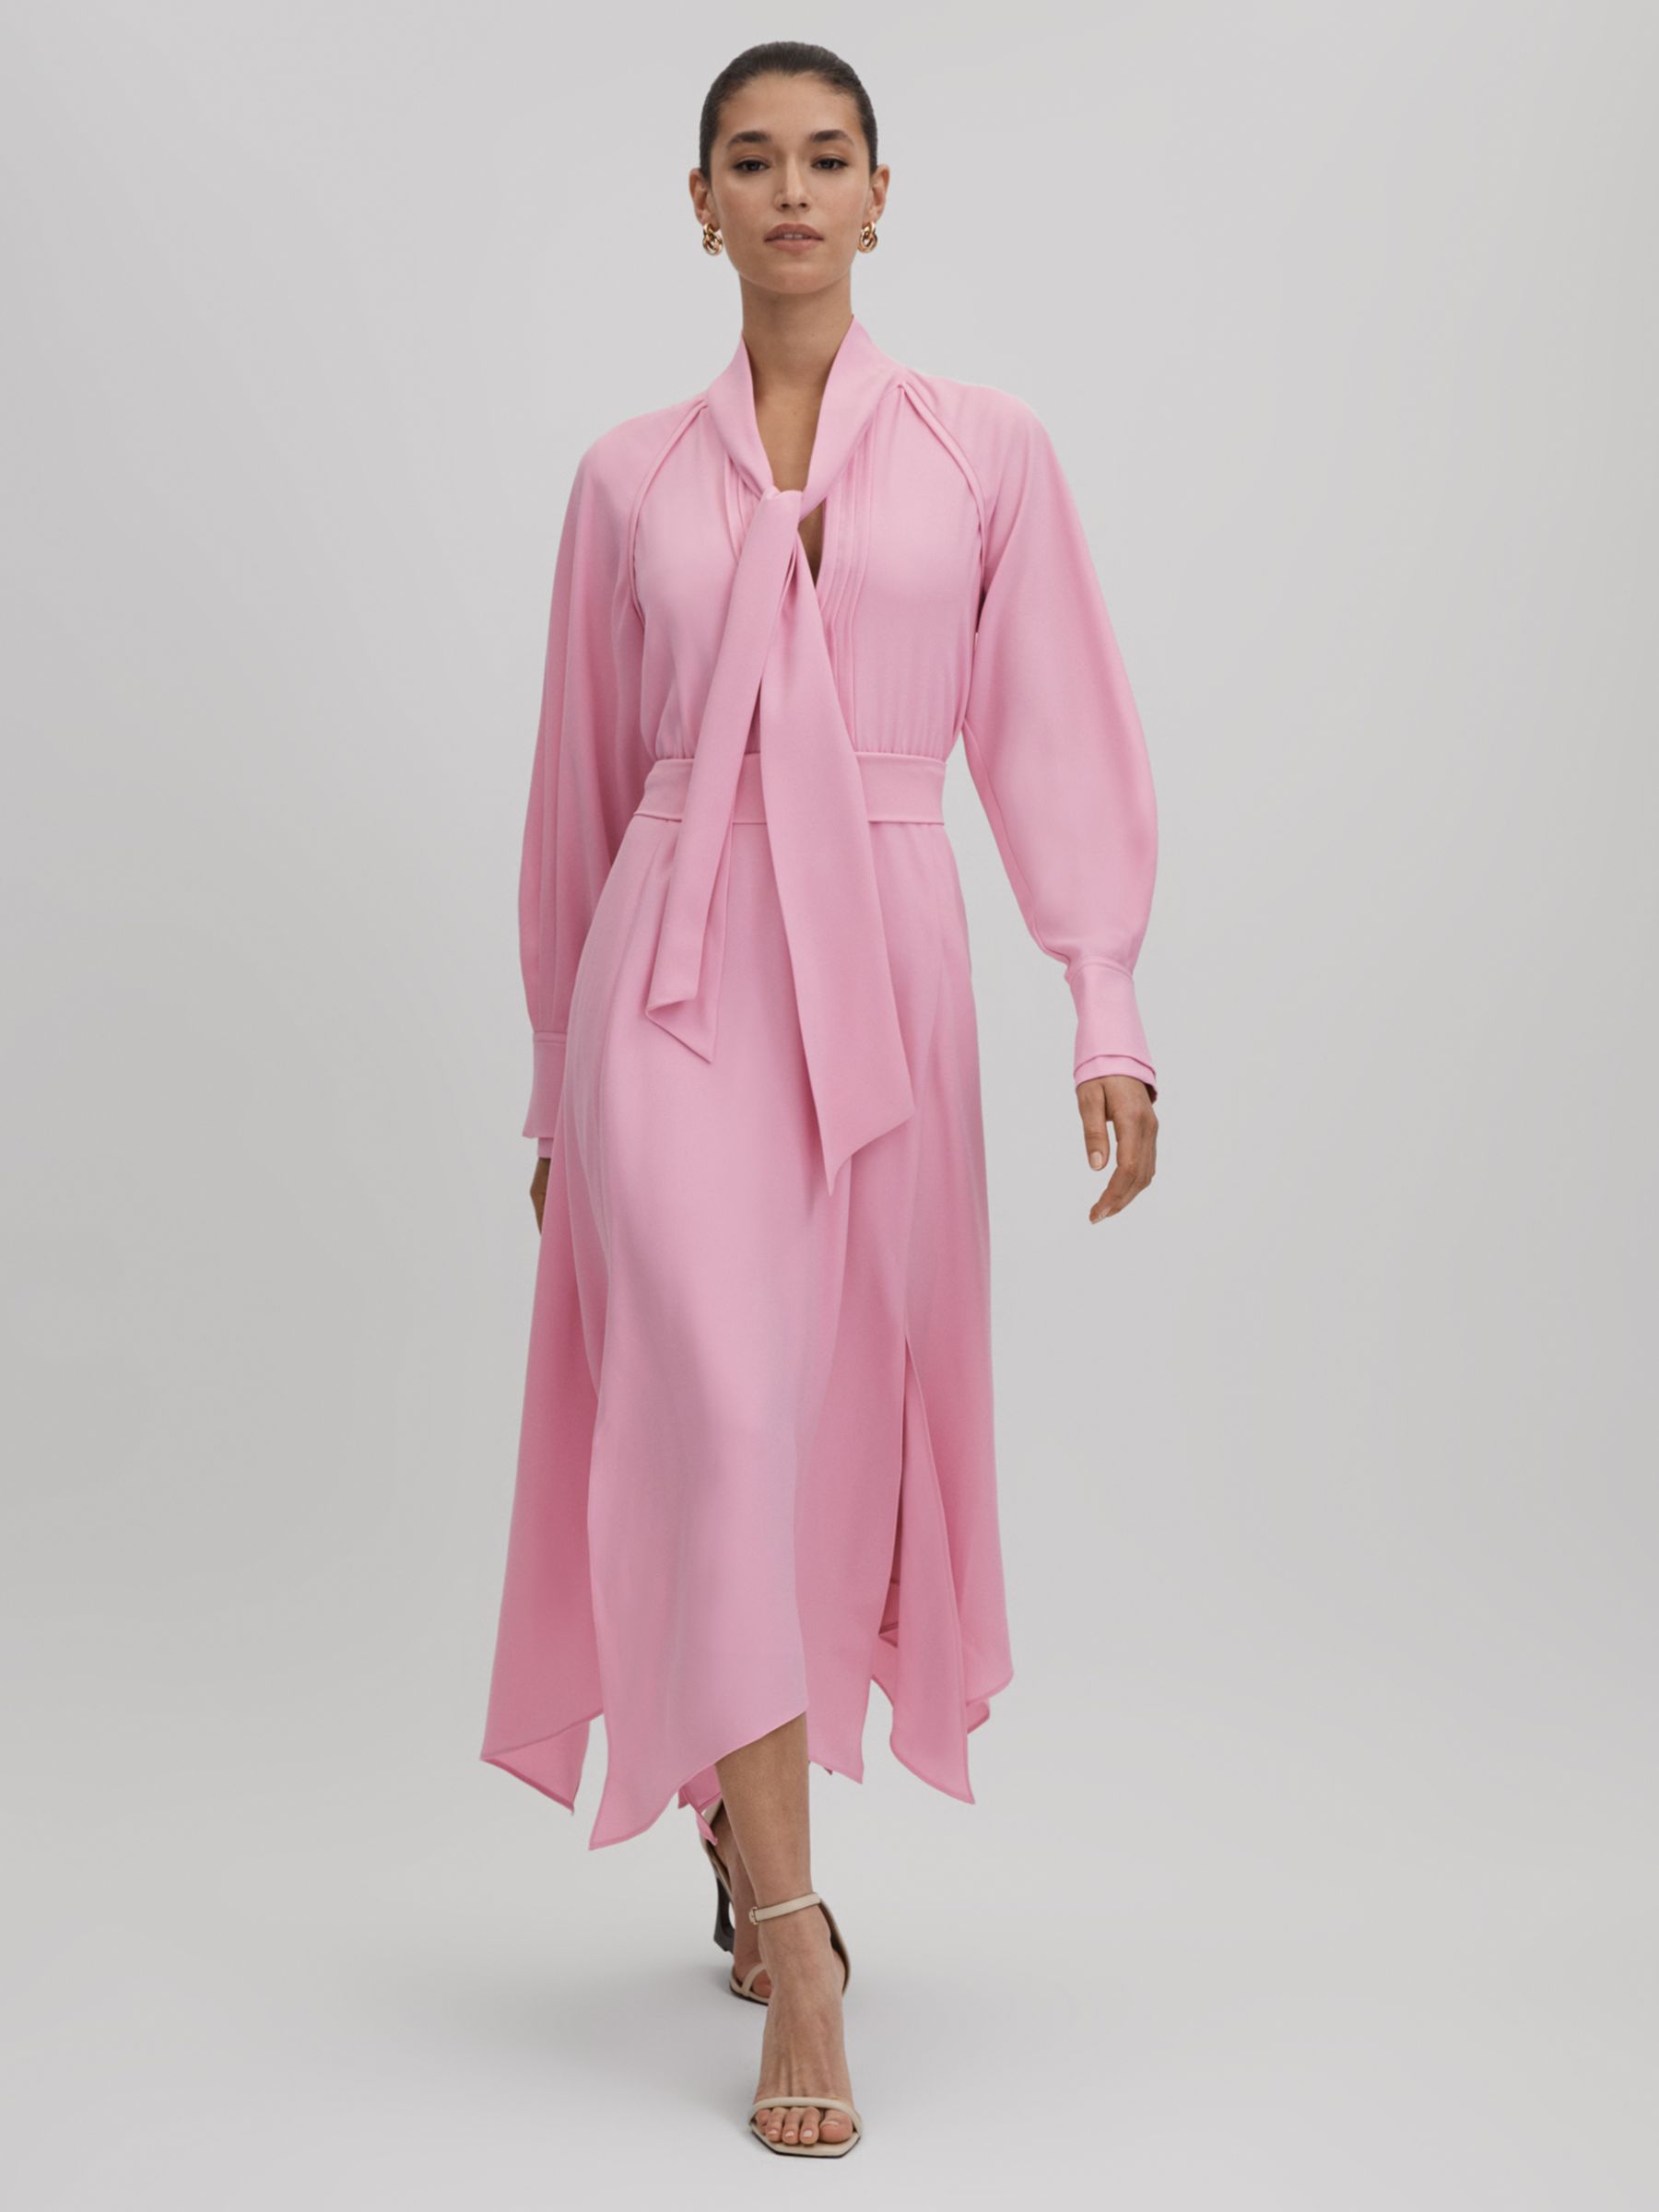 Reiss Erica Tie Neck Belted Midi Dress, Pink £248.00